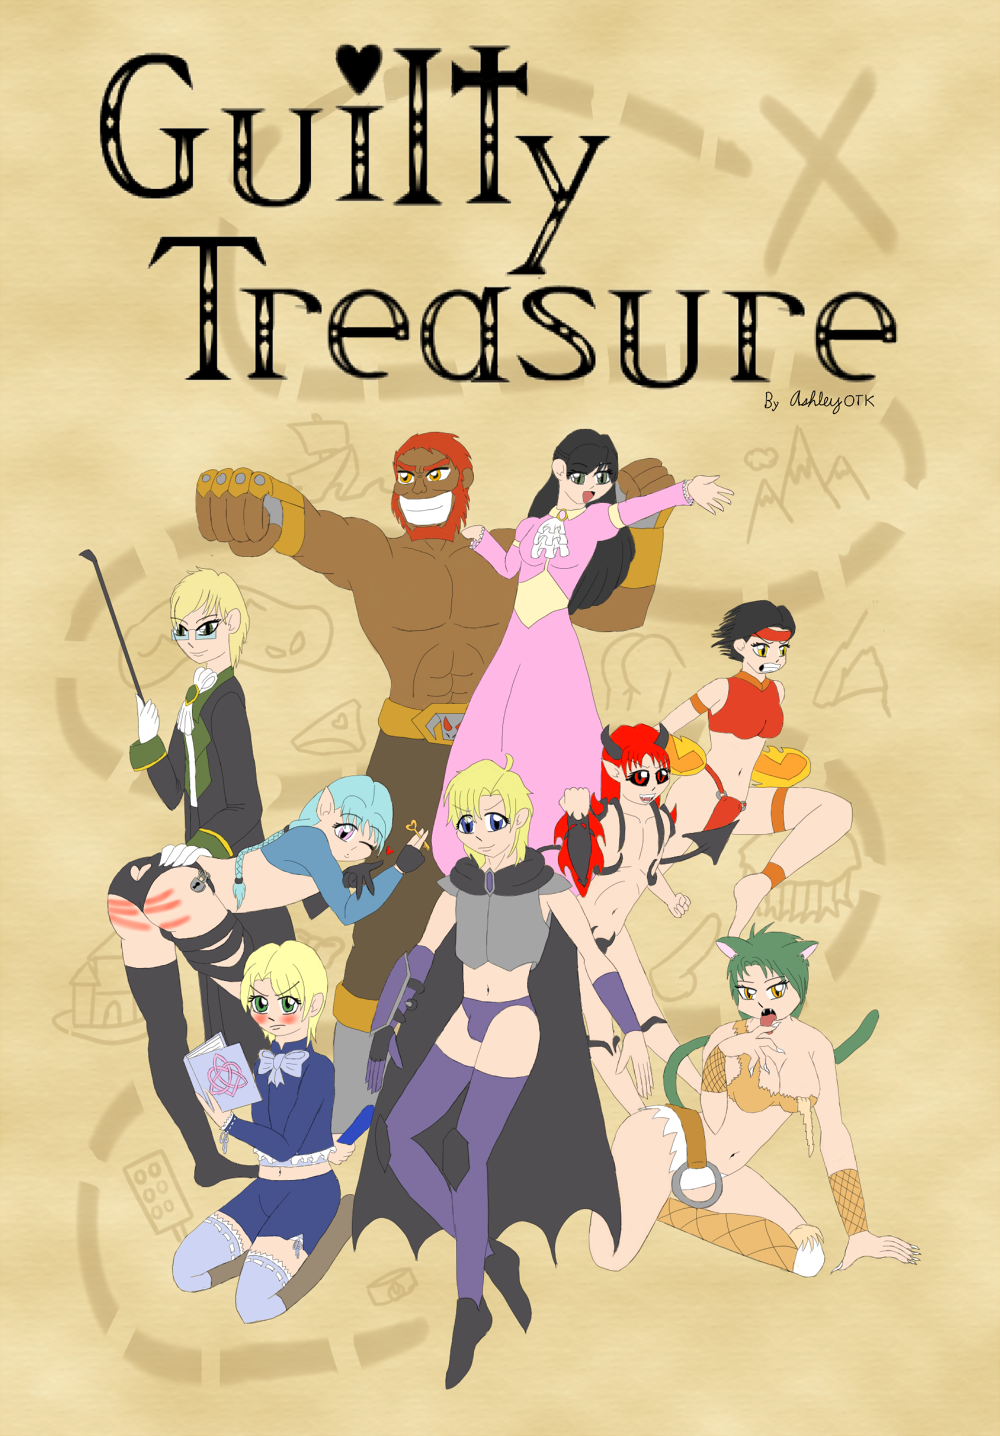 Guilty_Treasure__Guilty Treasure by AshleyOTK